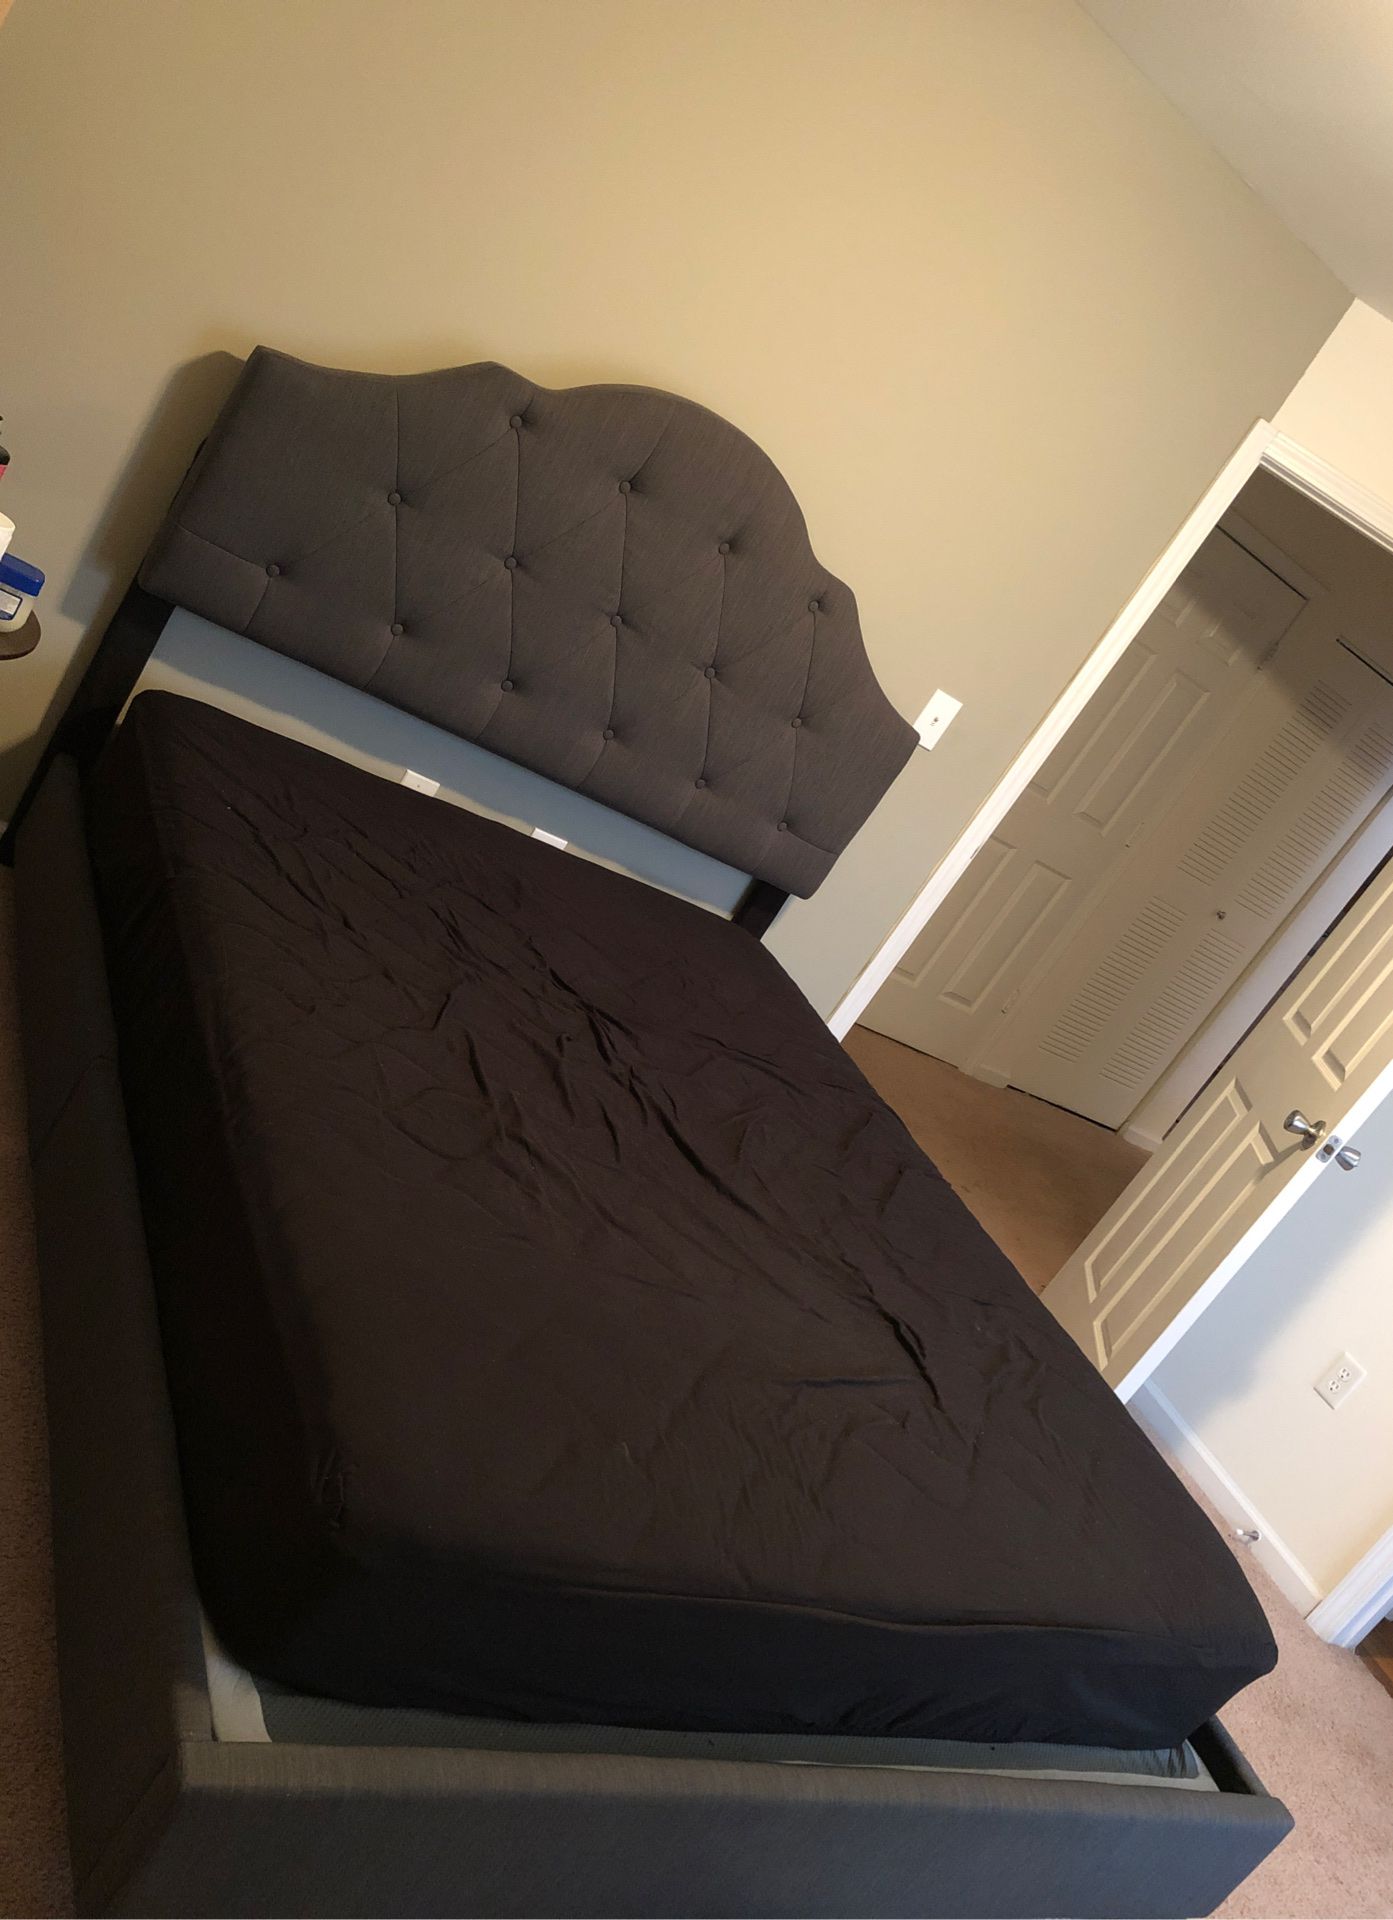 Queen bed for sale